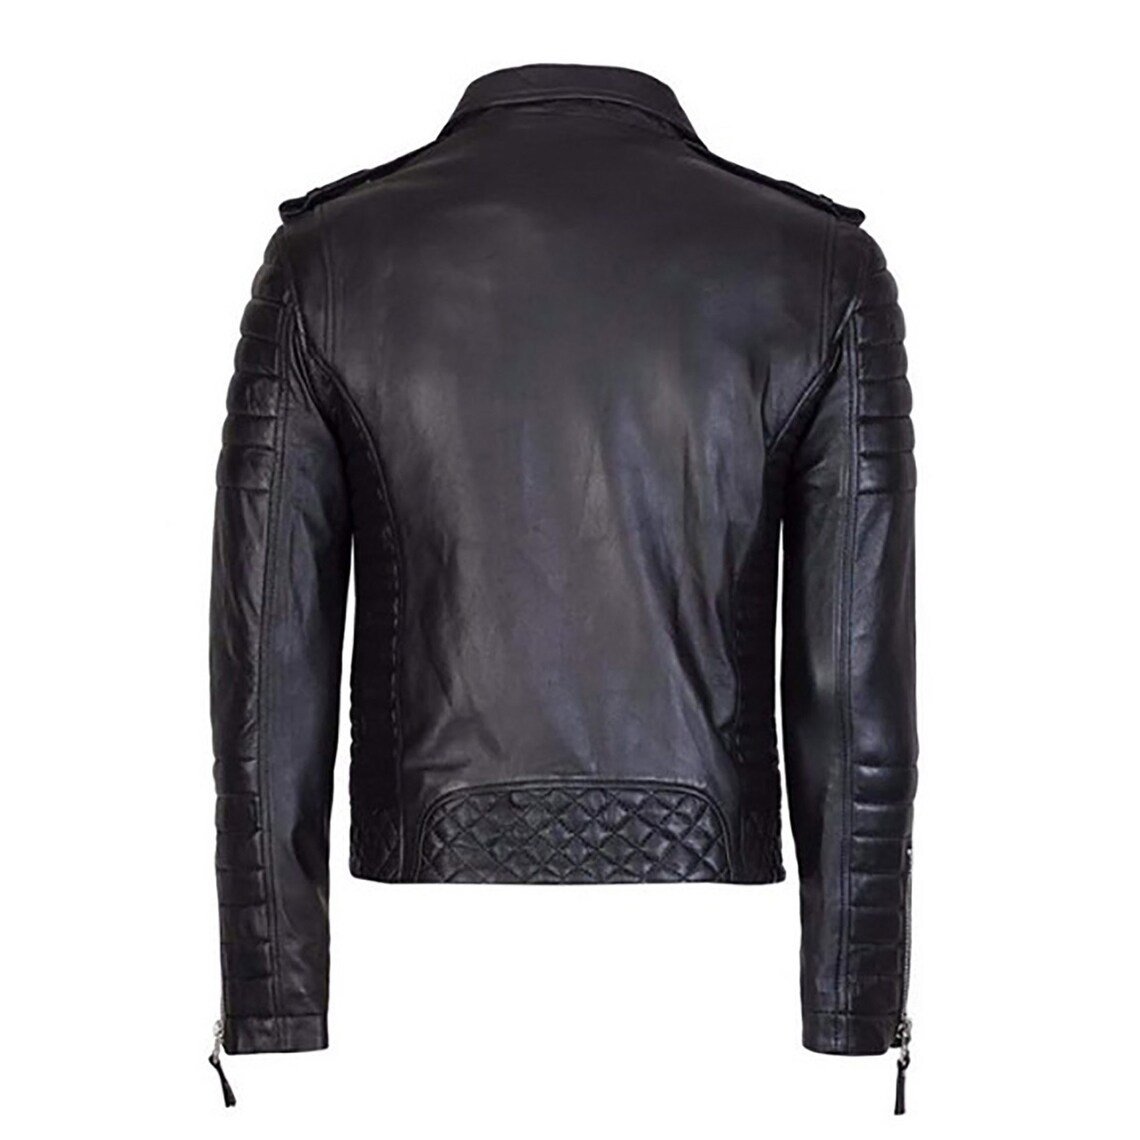 Men's Black Bikers Jacket Street Fashion Motorcycle Jacket